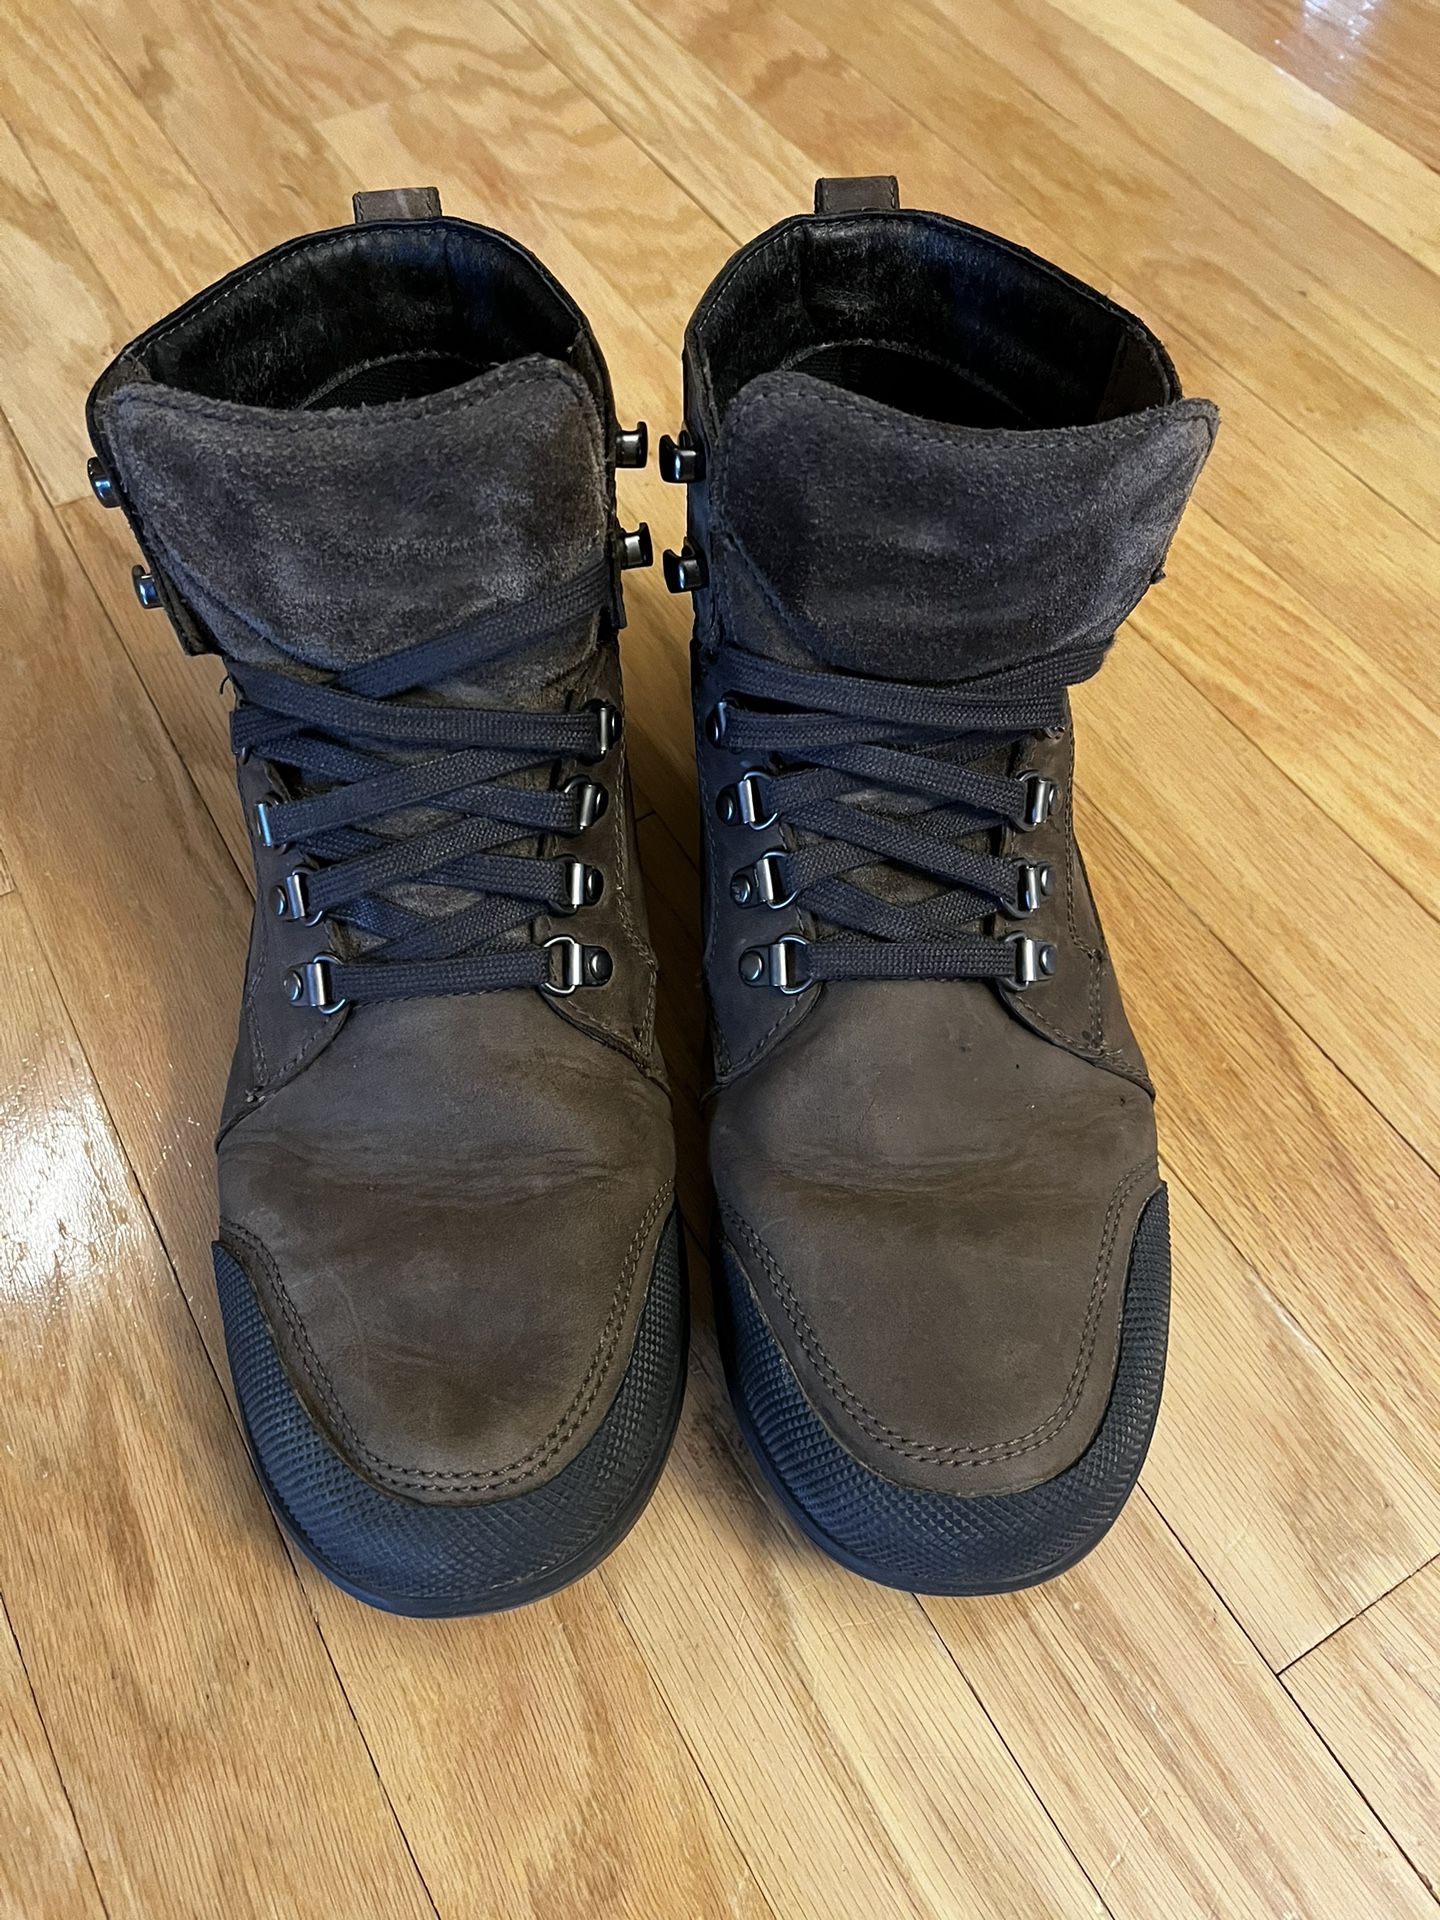 Sorel Boots Size 9